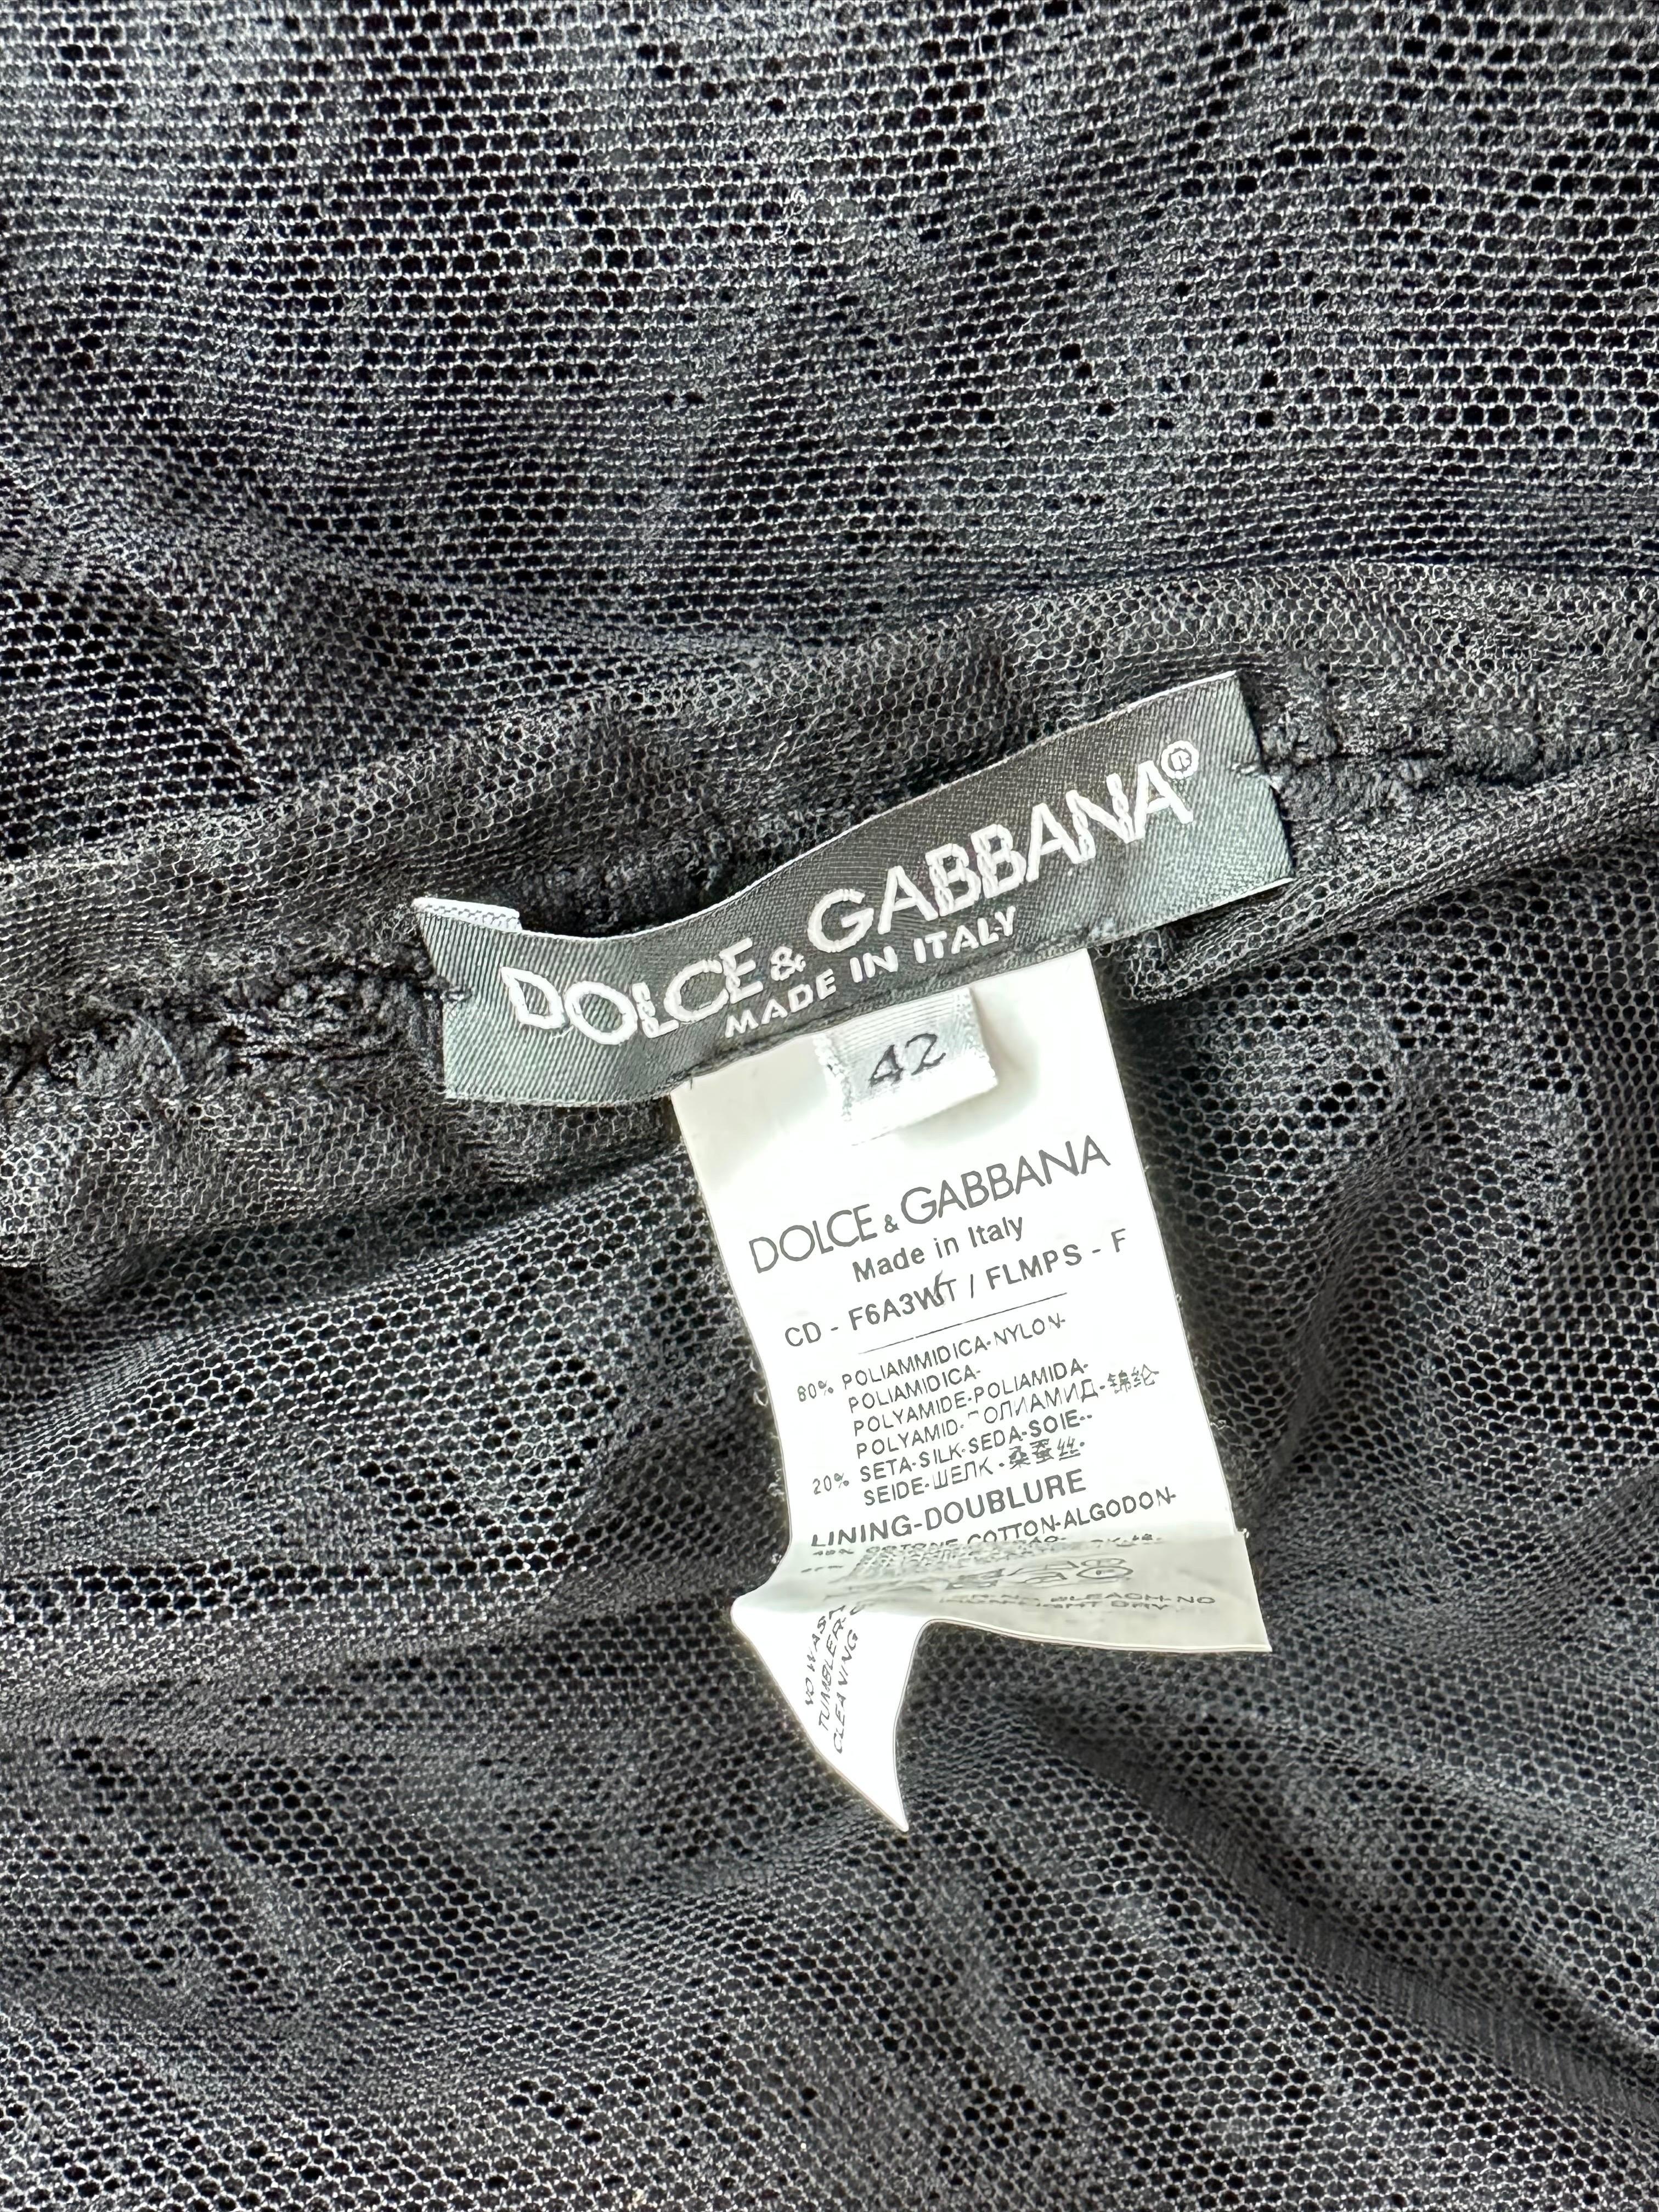 Dolce & Gabbana Lace Up Bustier Sheer Lace Crochet Bodycon Black Mini Dress For Sale 4